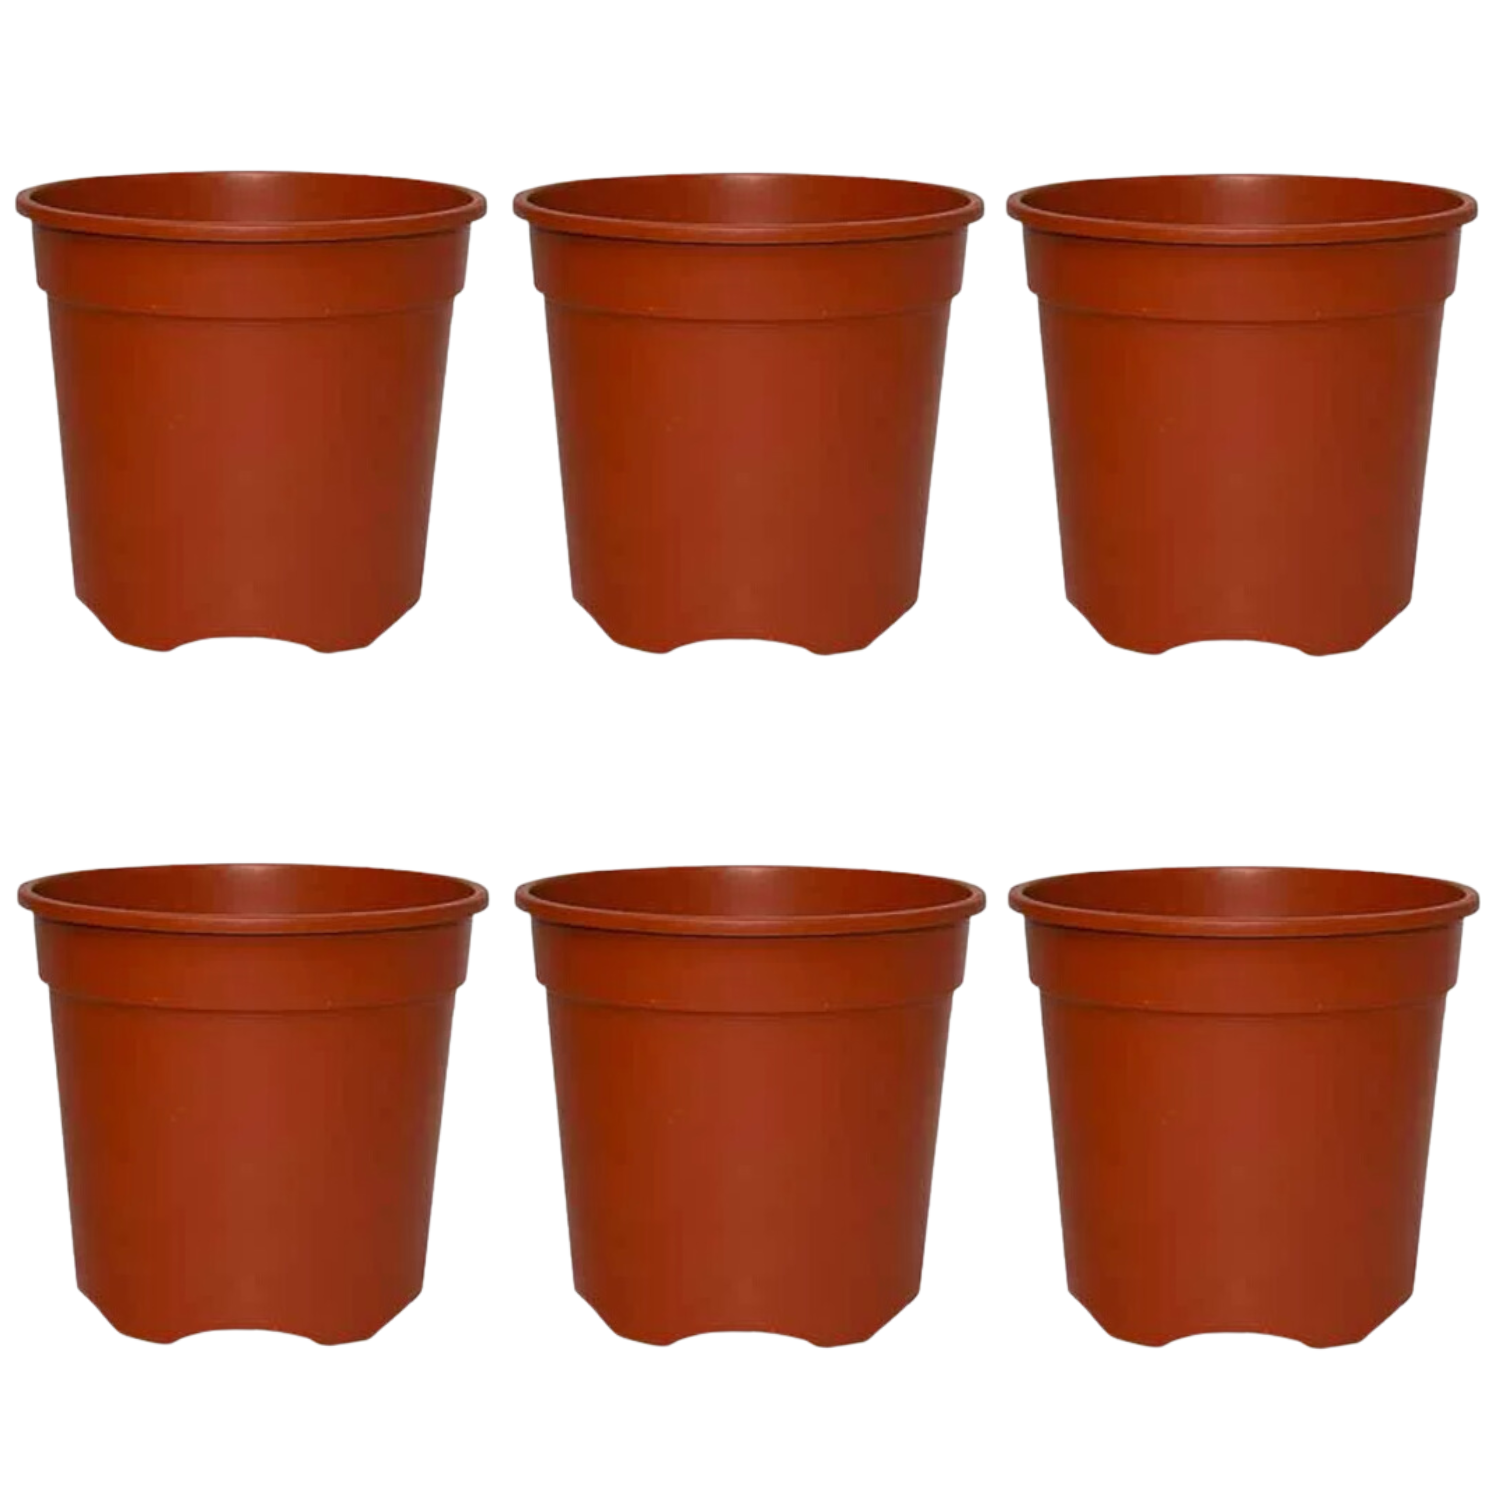 8 Inch Gro Pro Grower Plastic Pot for Home & Garden